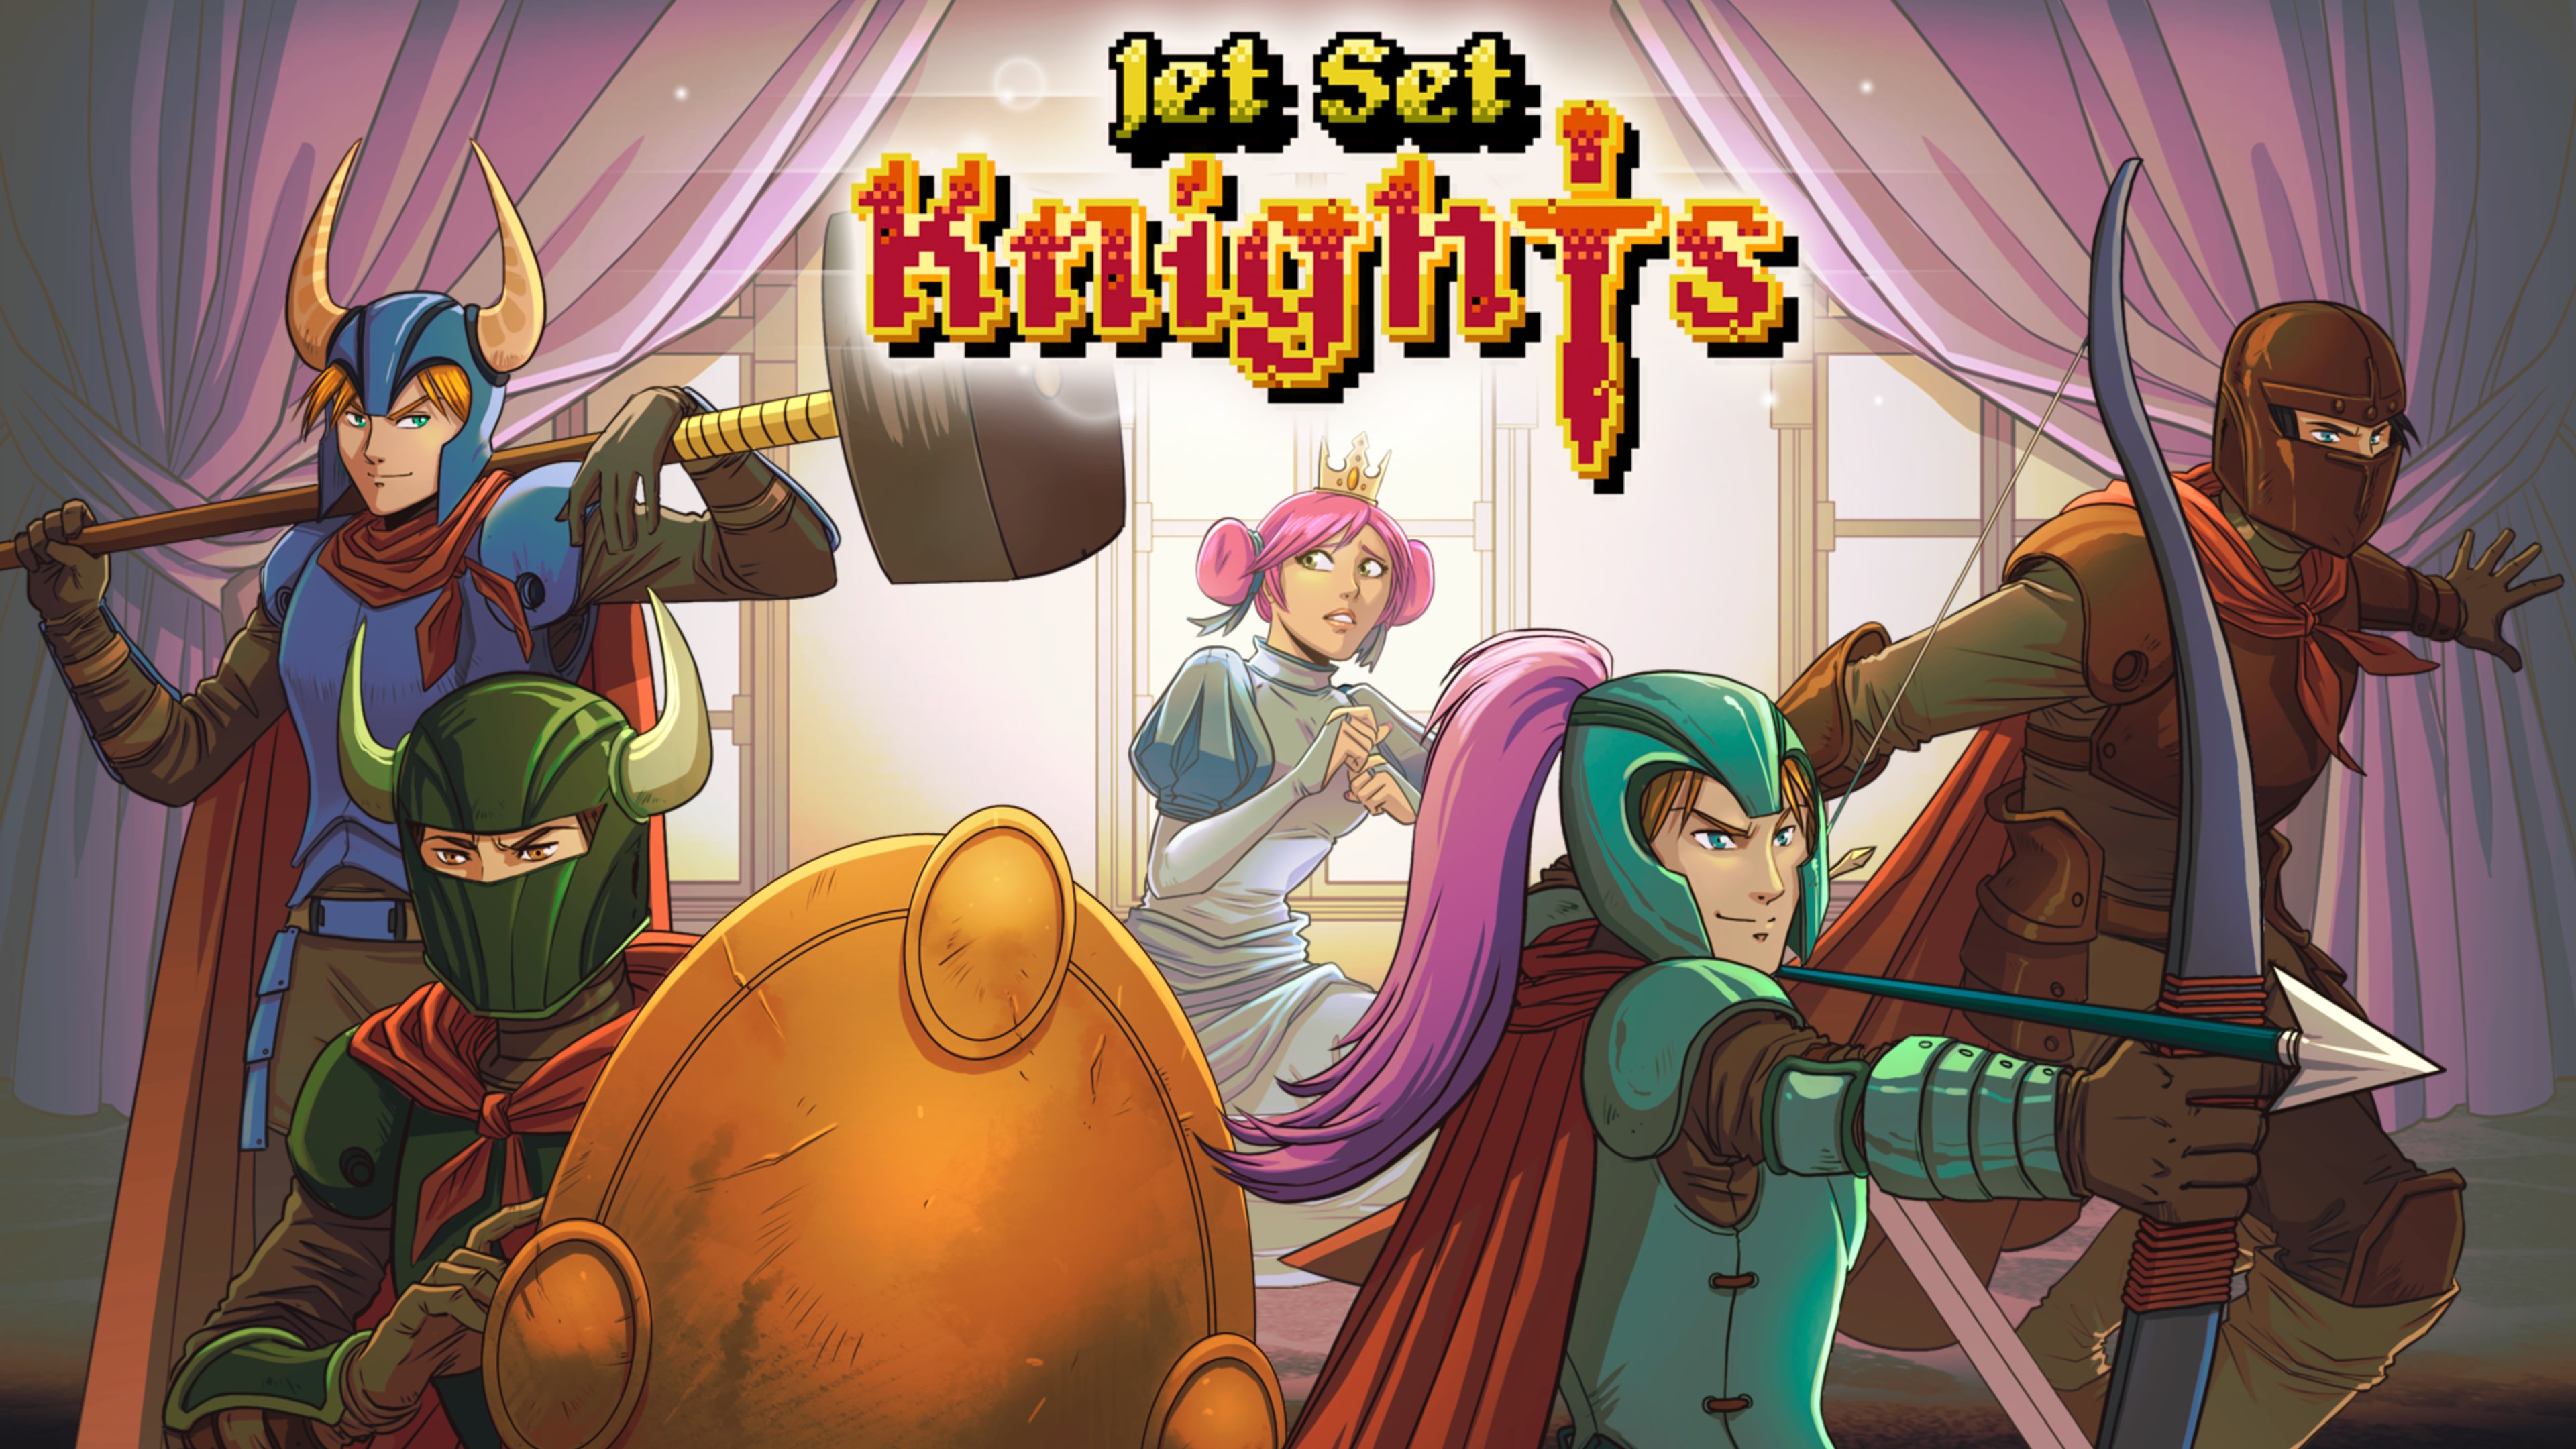 Jet Set Knights (English, Japanese)